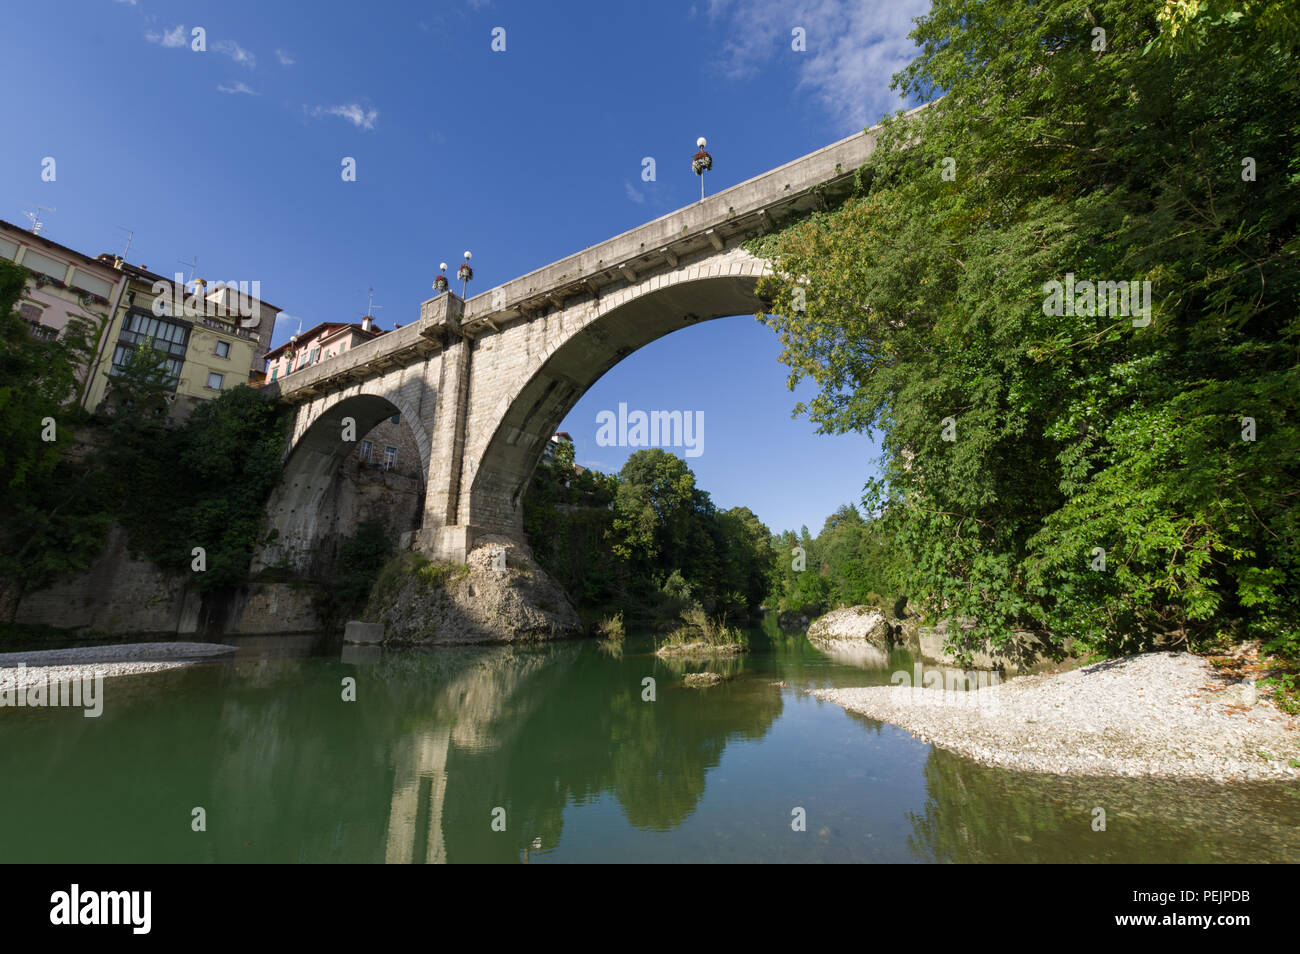 Cividale del Friuli, Italy (15h August 2018) - The s.c. Devil's bridge over the river Natisone Stock Photo